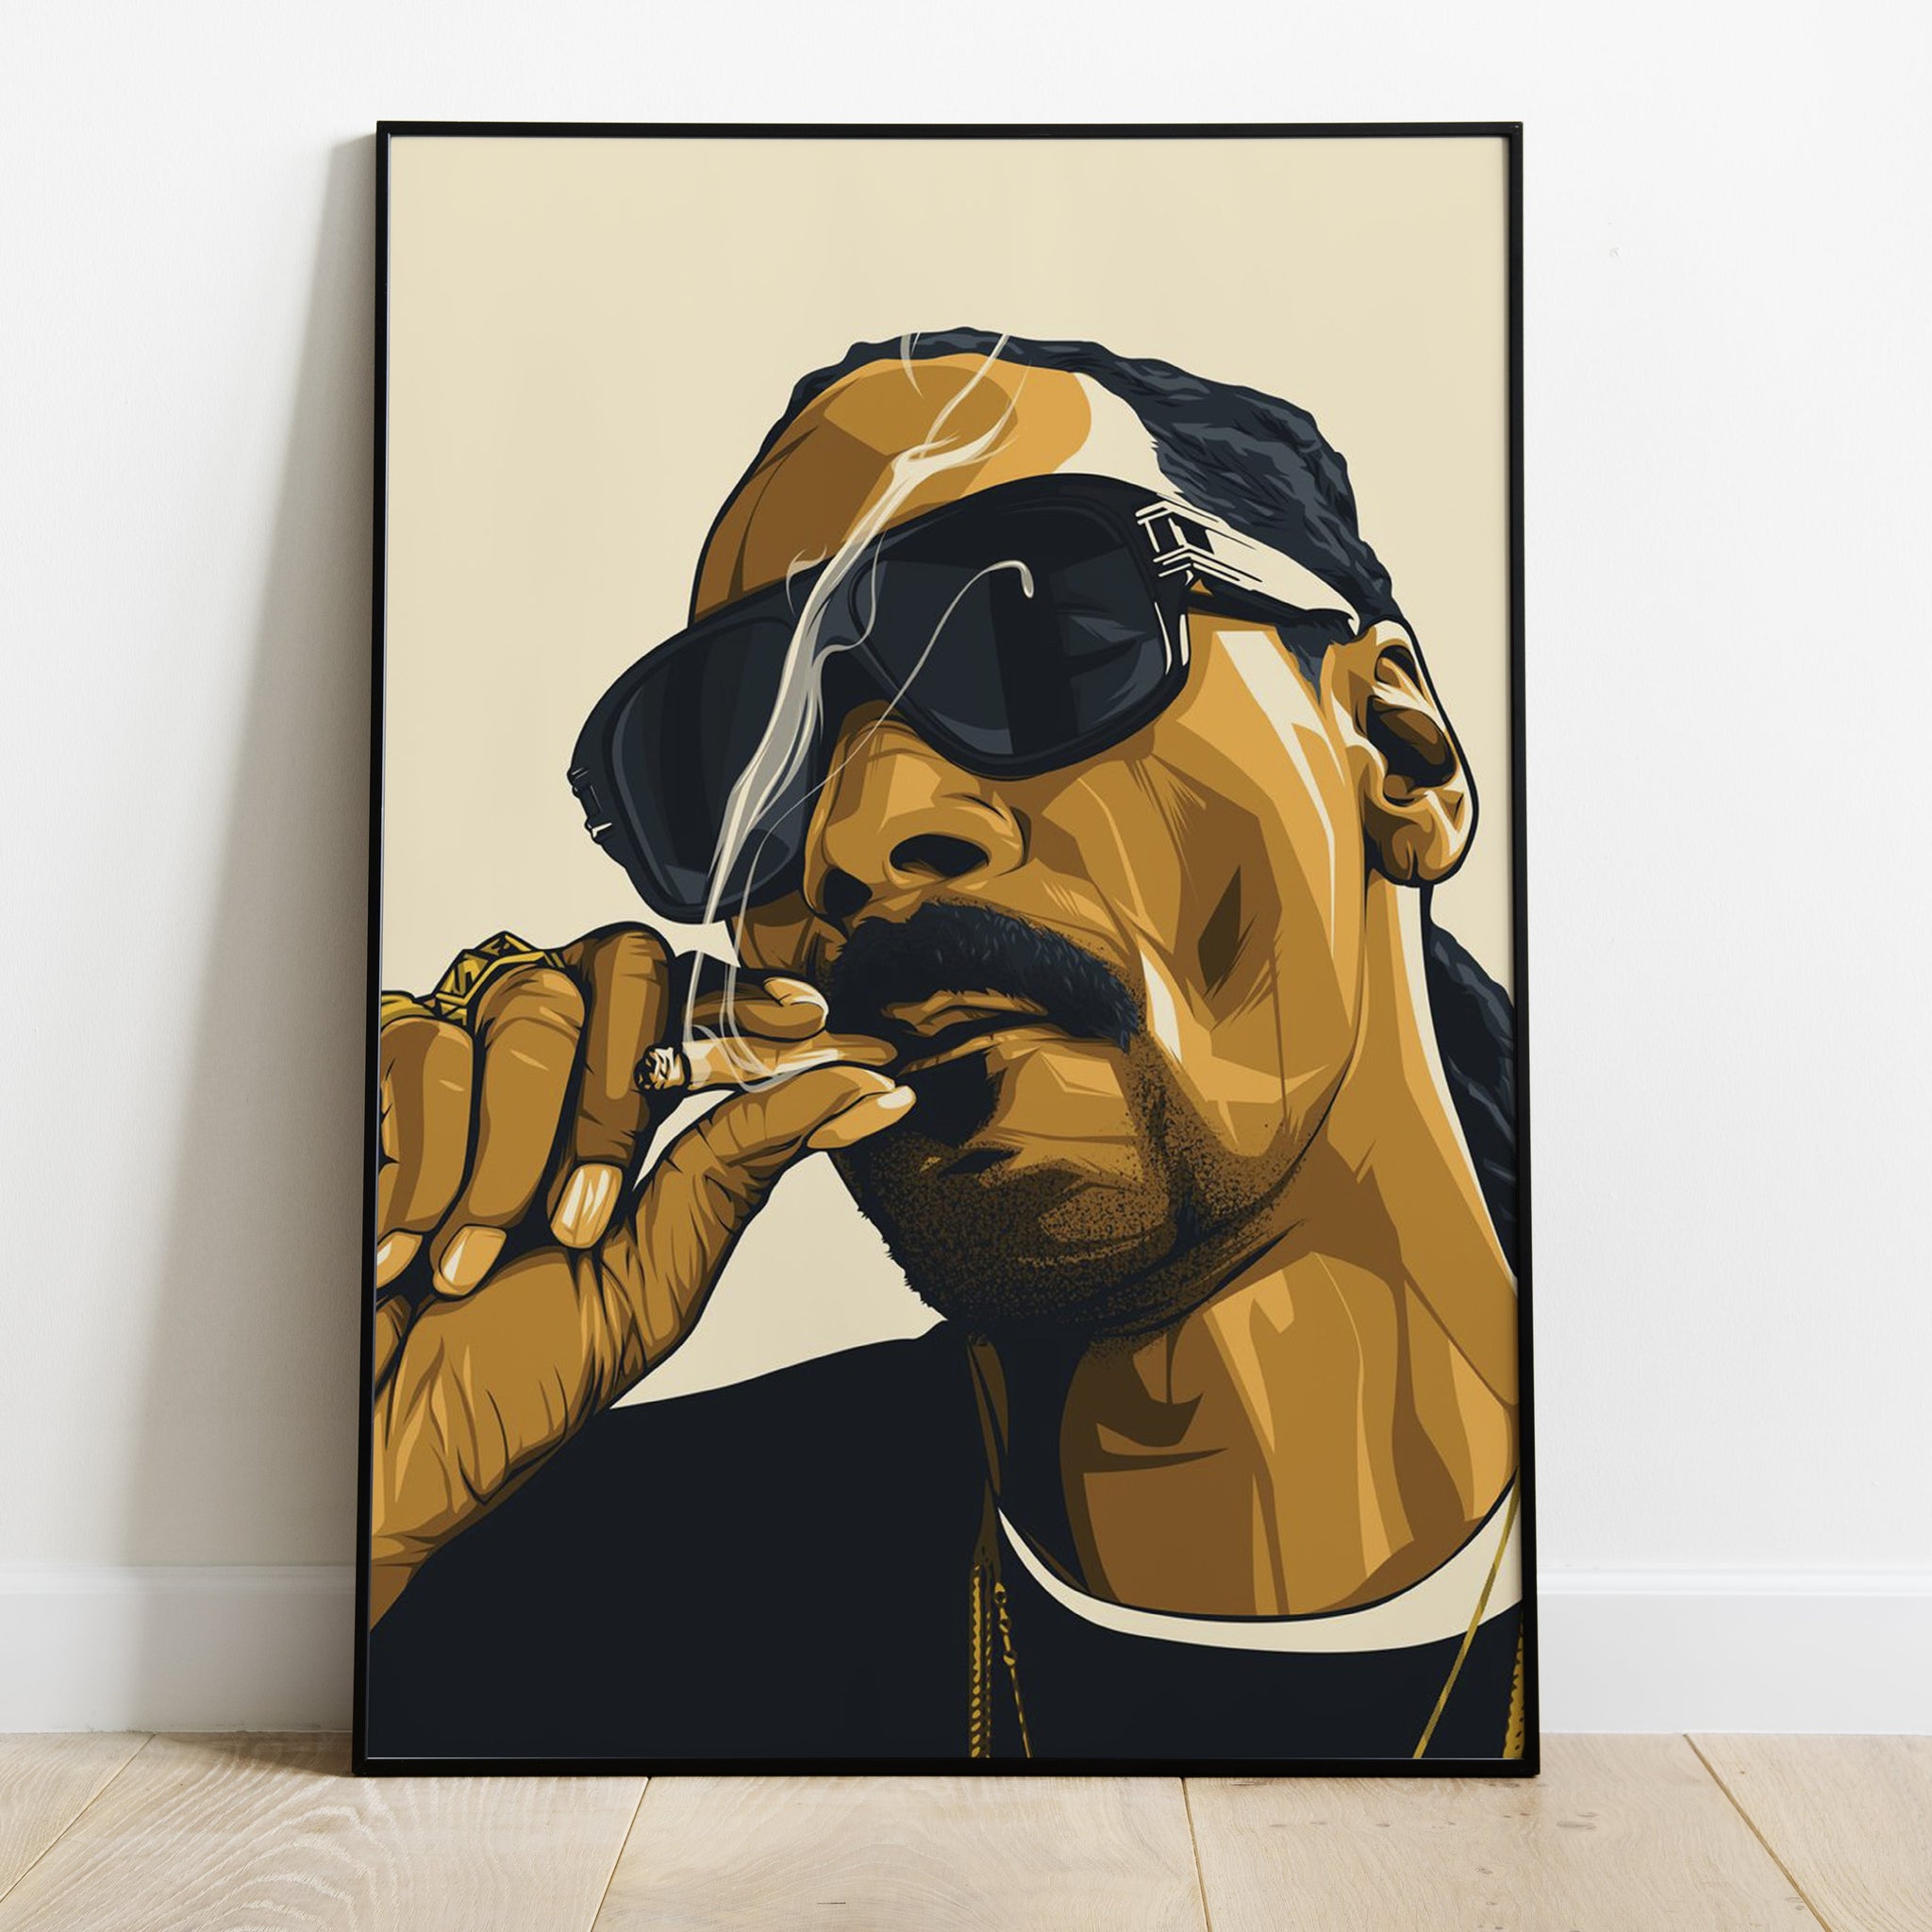 Snoop Dogg Smokin' Premium Poster - Team Spirit Store USA 